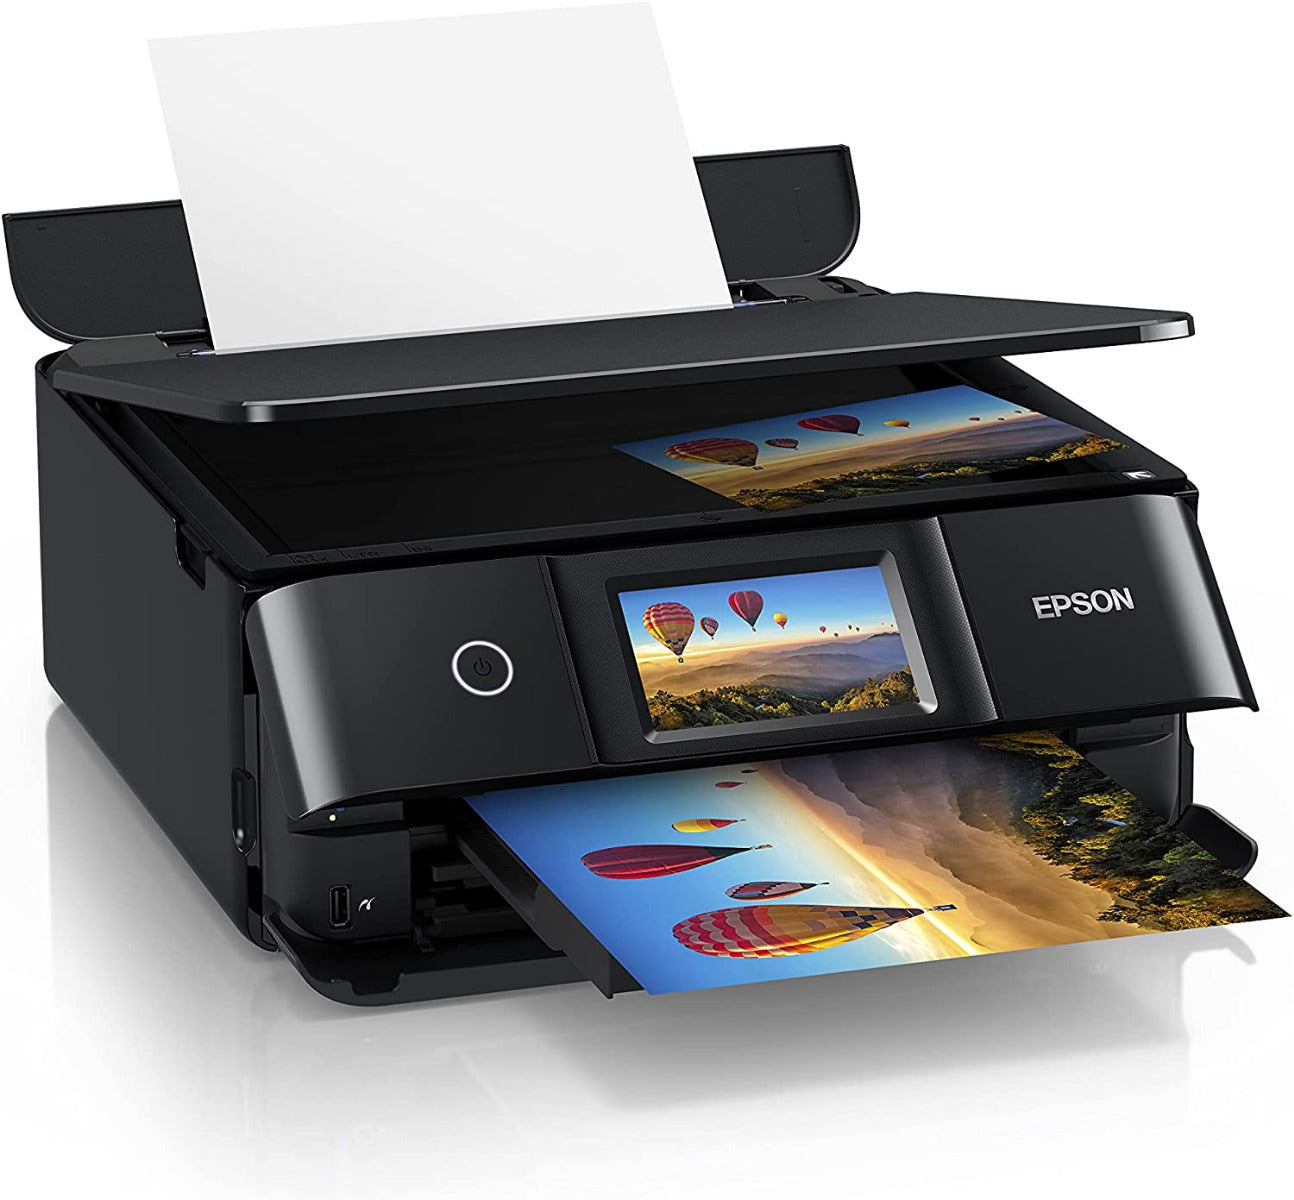 Product Image of Epson Expression Photo XP-8700 Printer, Scanner, Copier - Wi-Fi Printer, Black